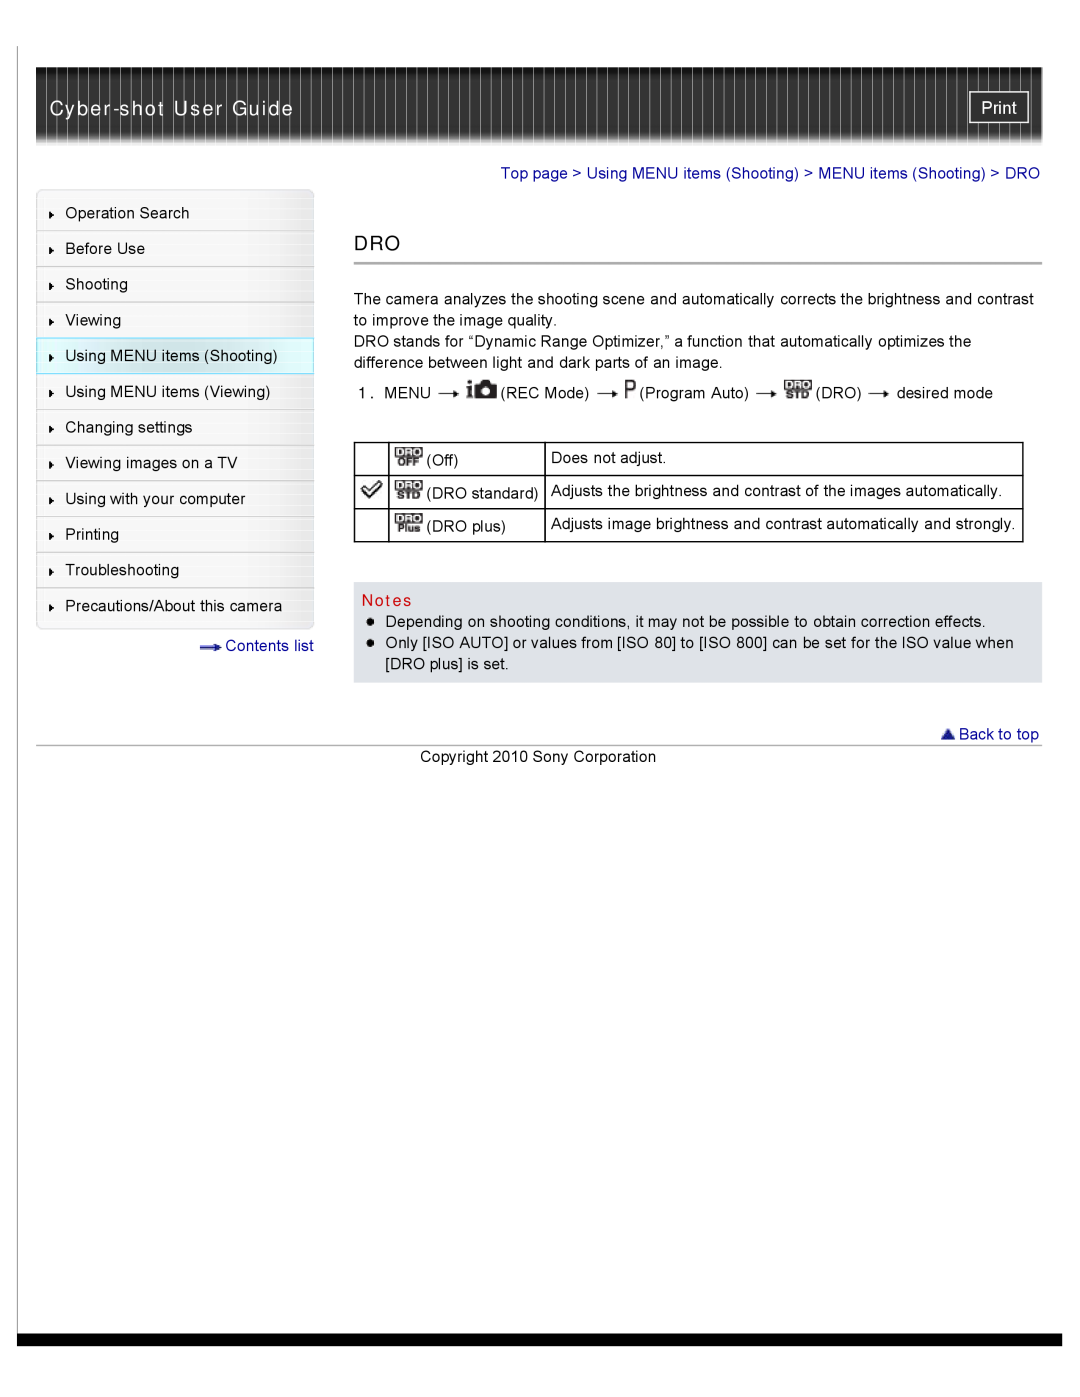 Sony DSC-W530, W550 Cyber-shot User Guide, Print, Top page Using MENU items Shooting MENU items Shooting DRO, Back to top 